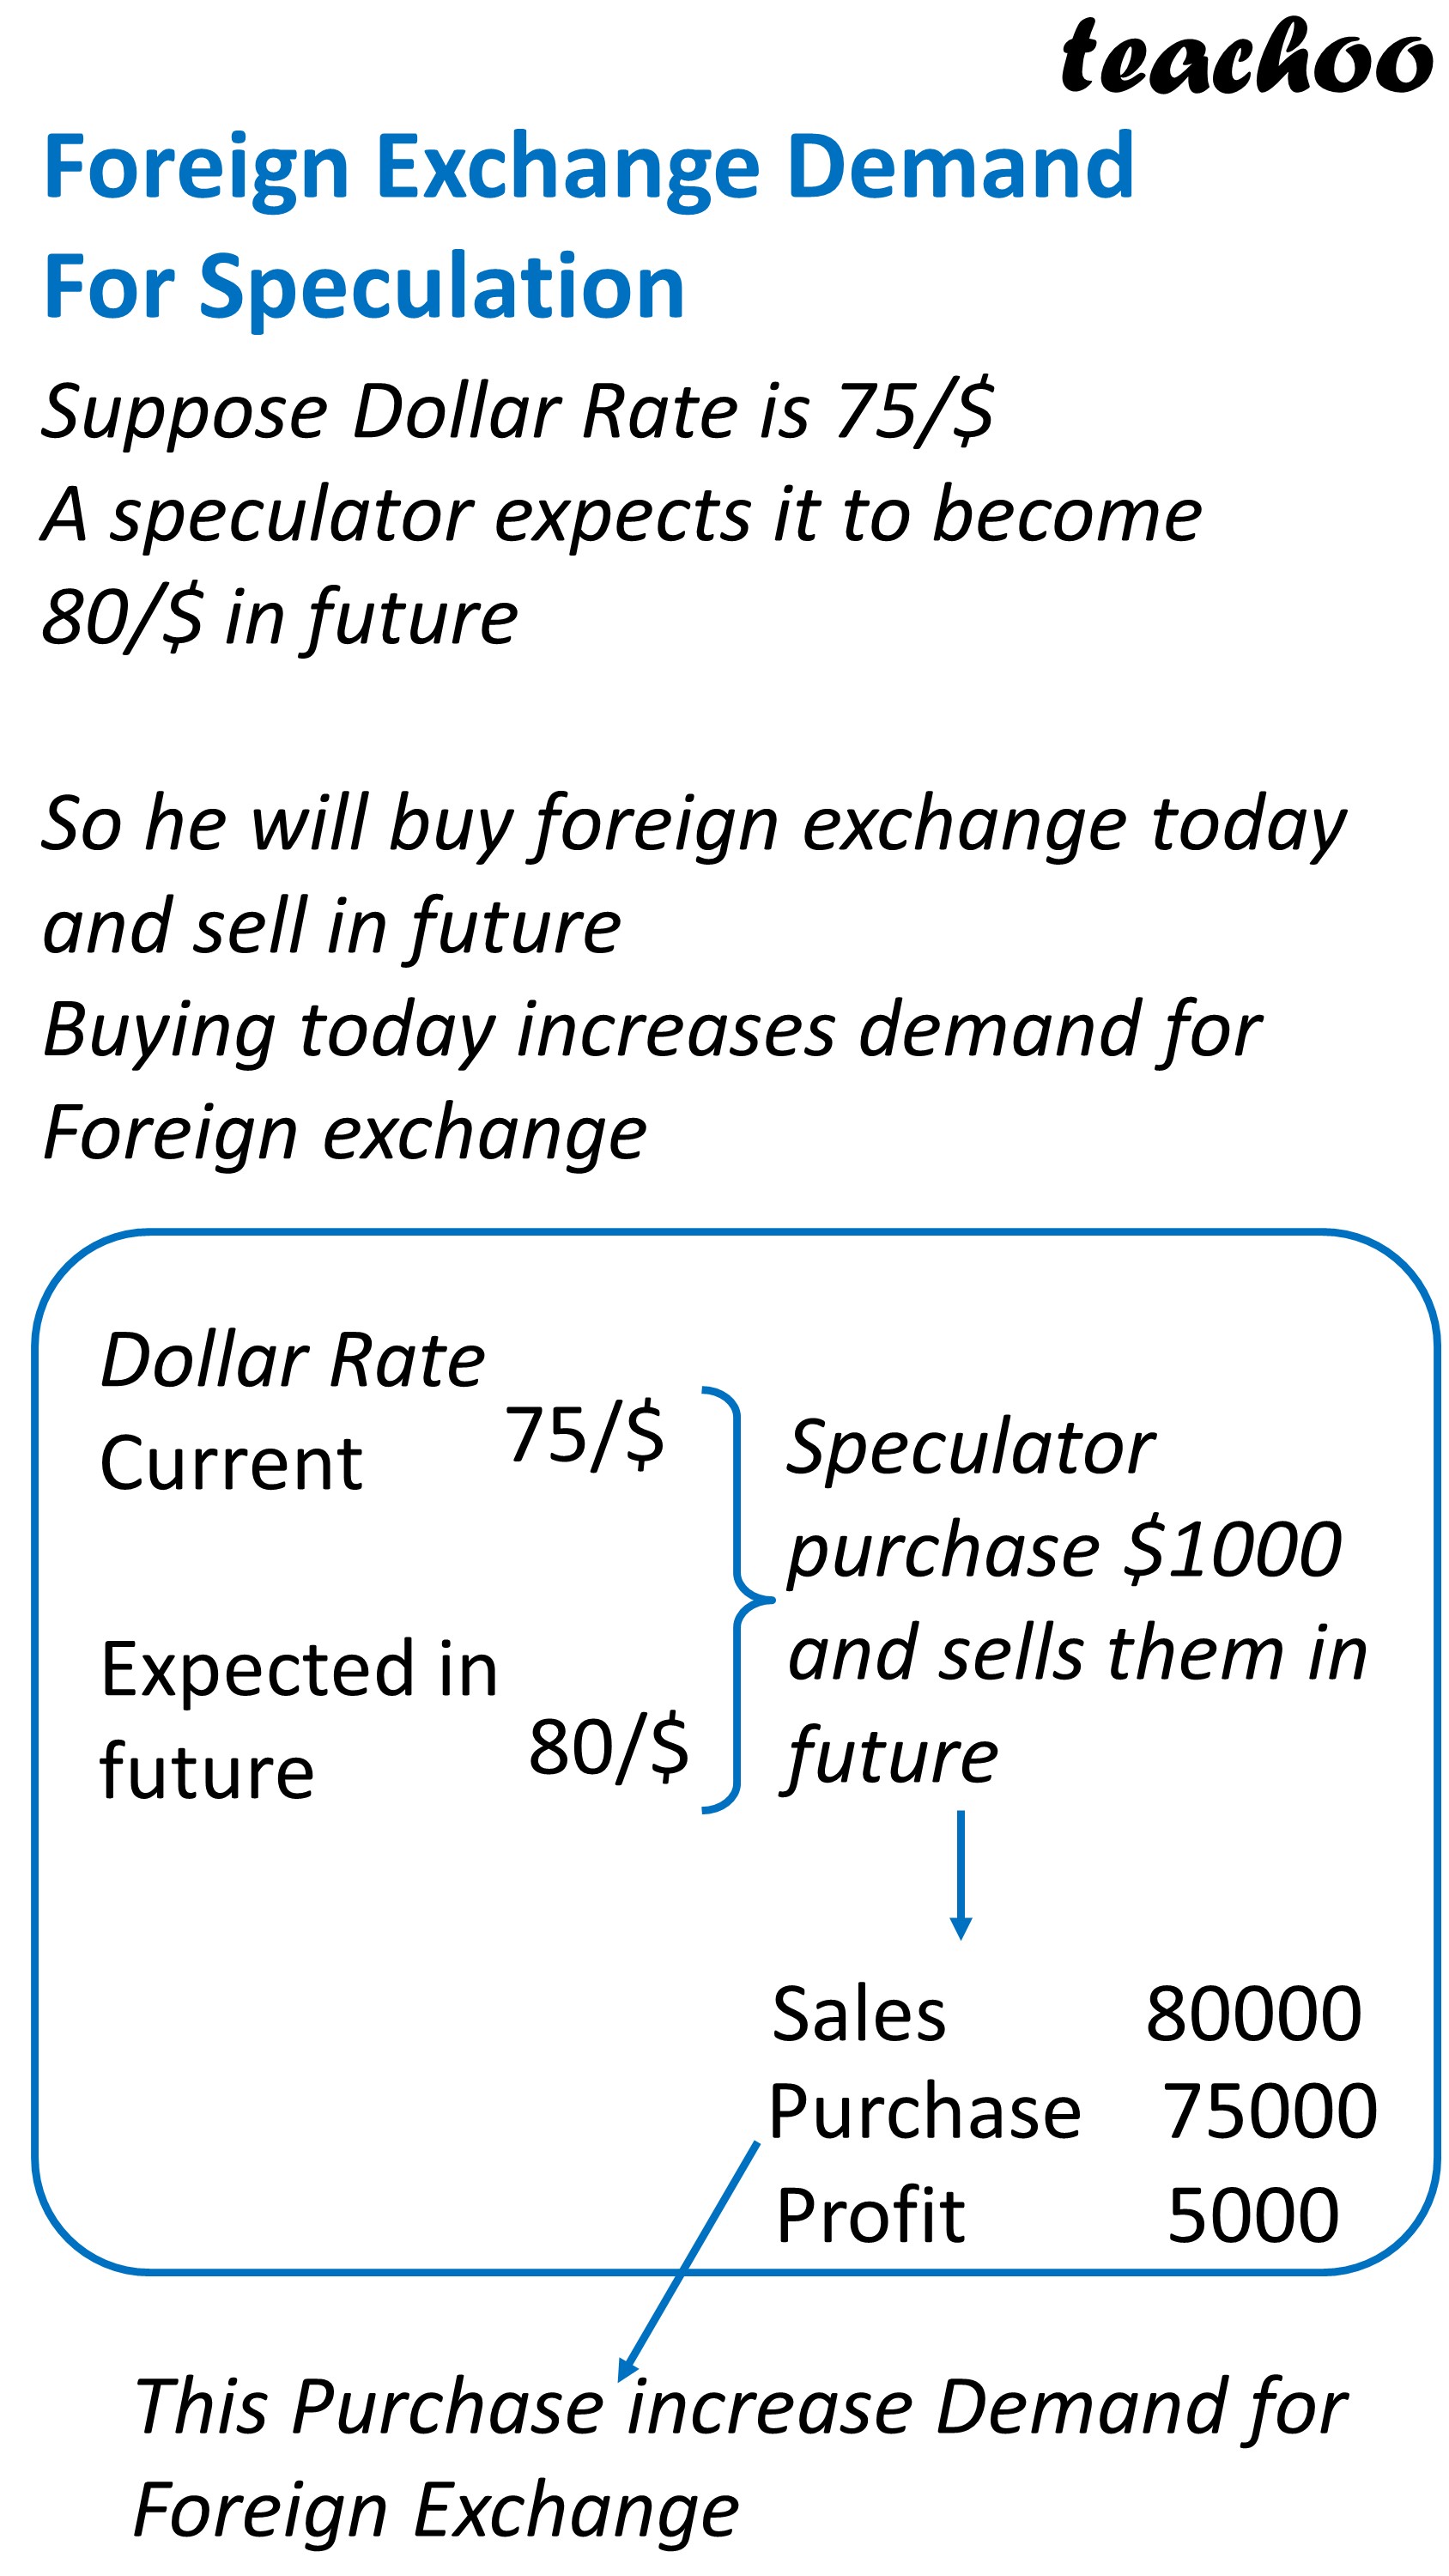 Foreign Exchange Demand For Speculation - Teachoo.JPG